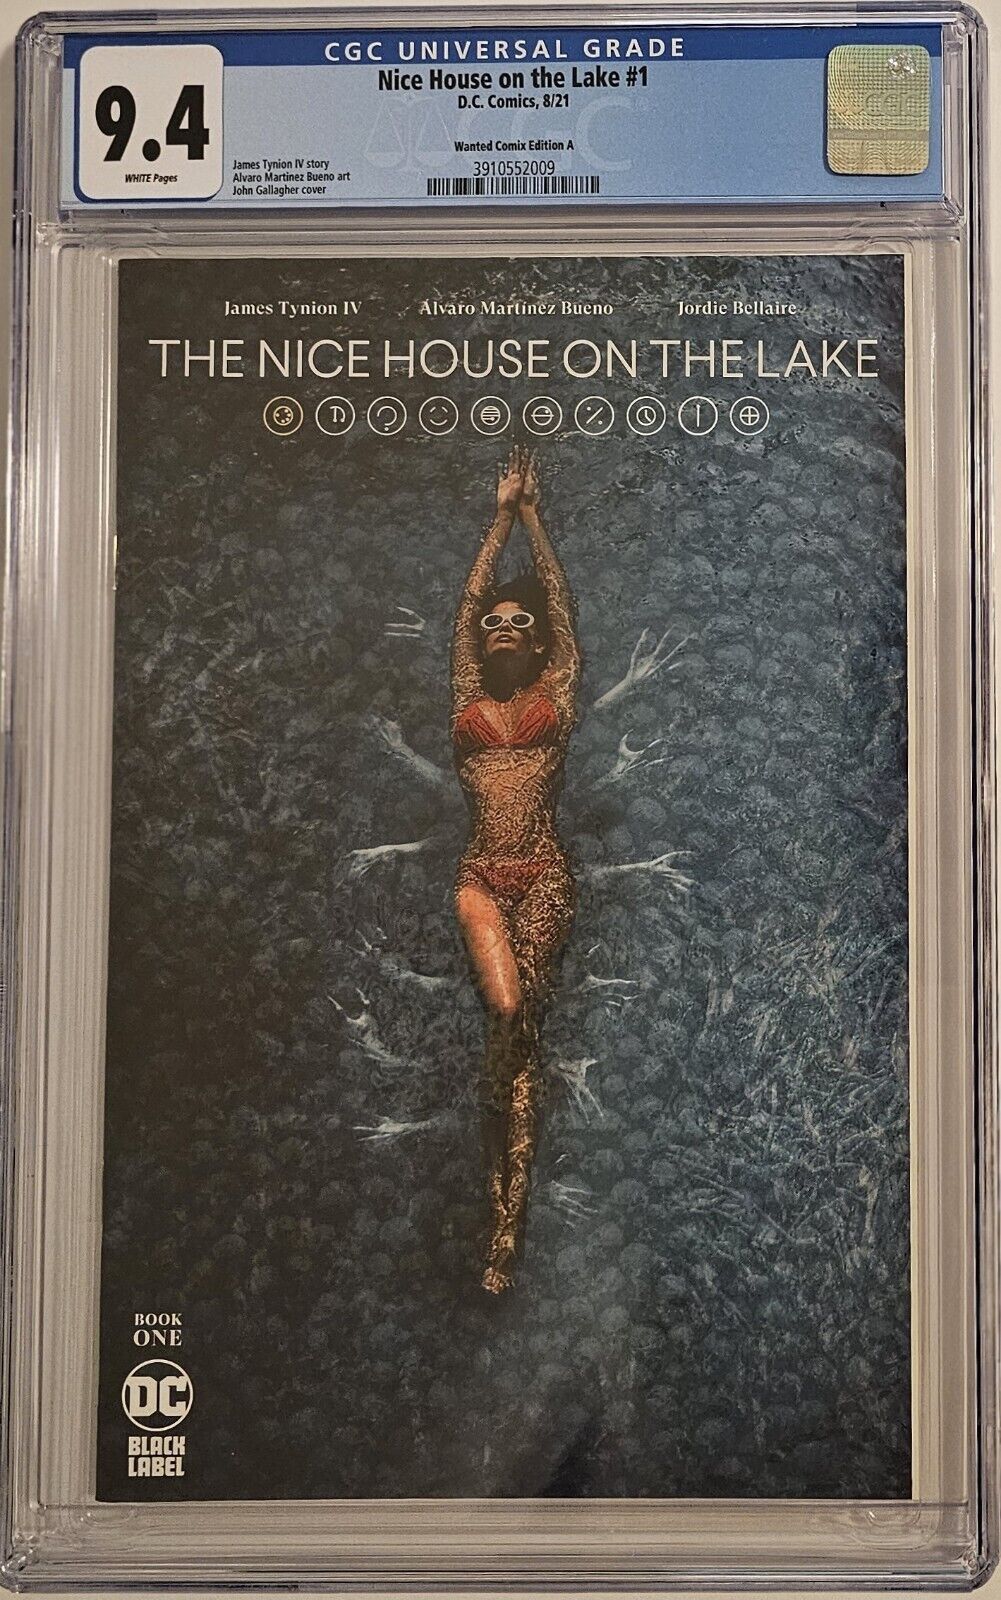 Nice House on the Lake #1 CGC 9.4 Wanted Comix Edition A D.C. Comics 2021 Tynion